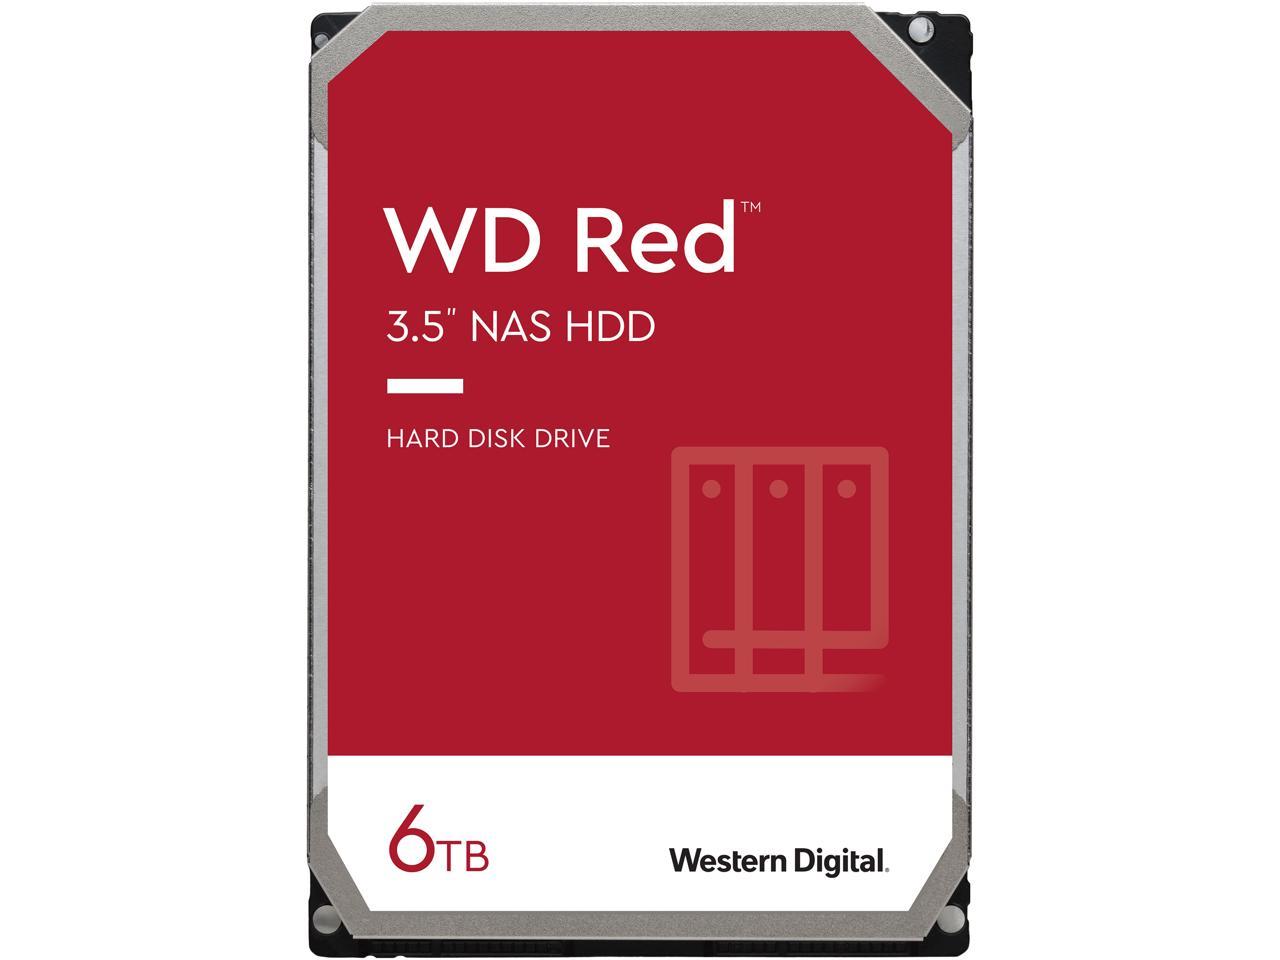 6TB WD Red 3.5" NAS Hard Drive $90